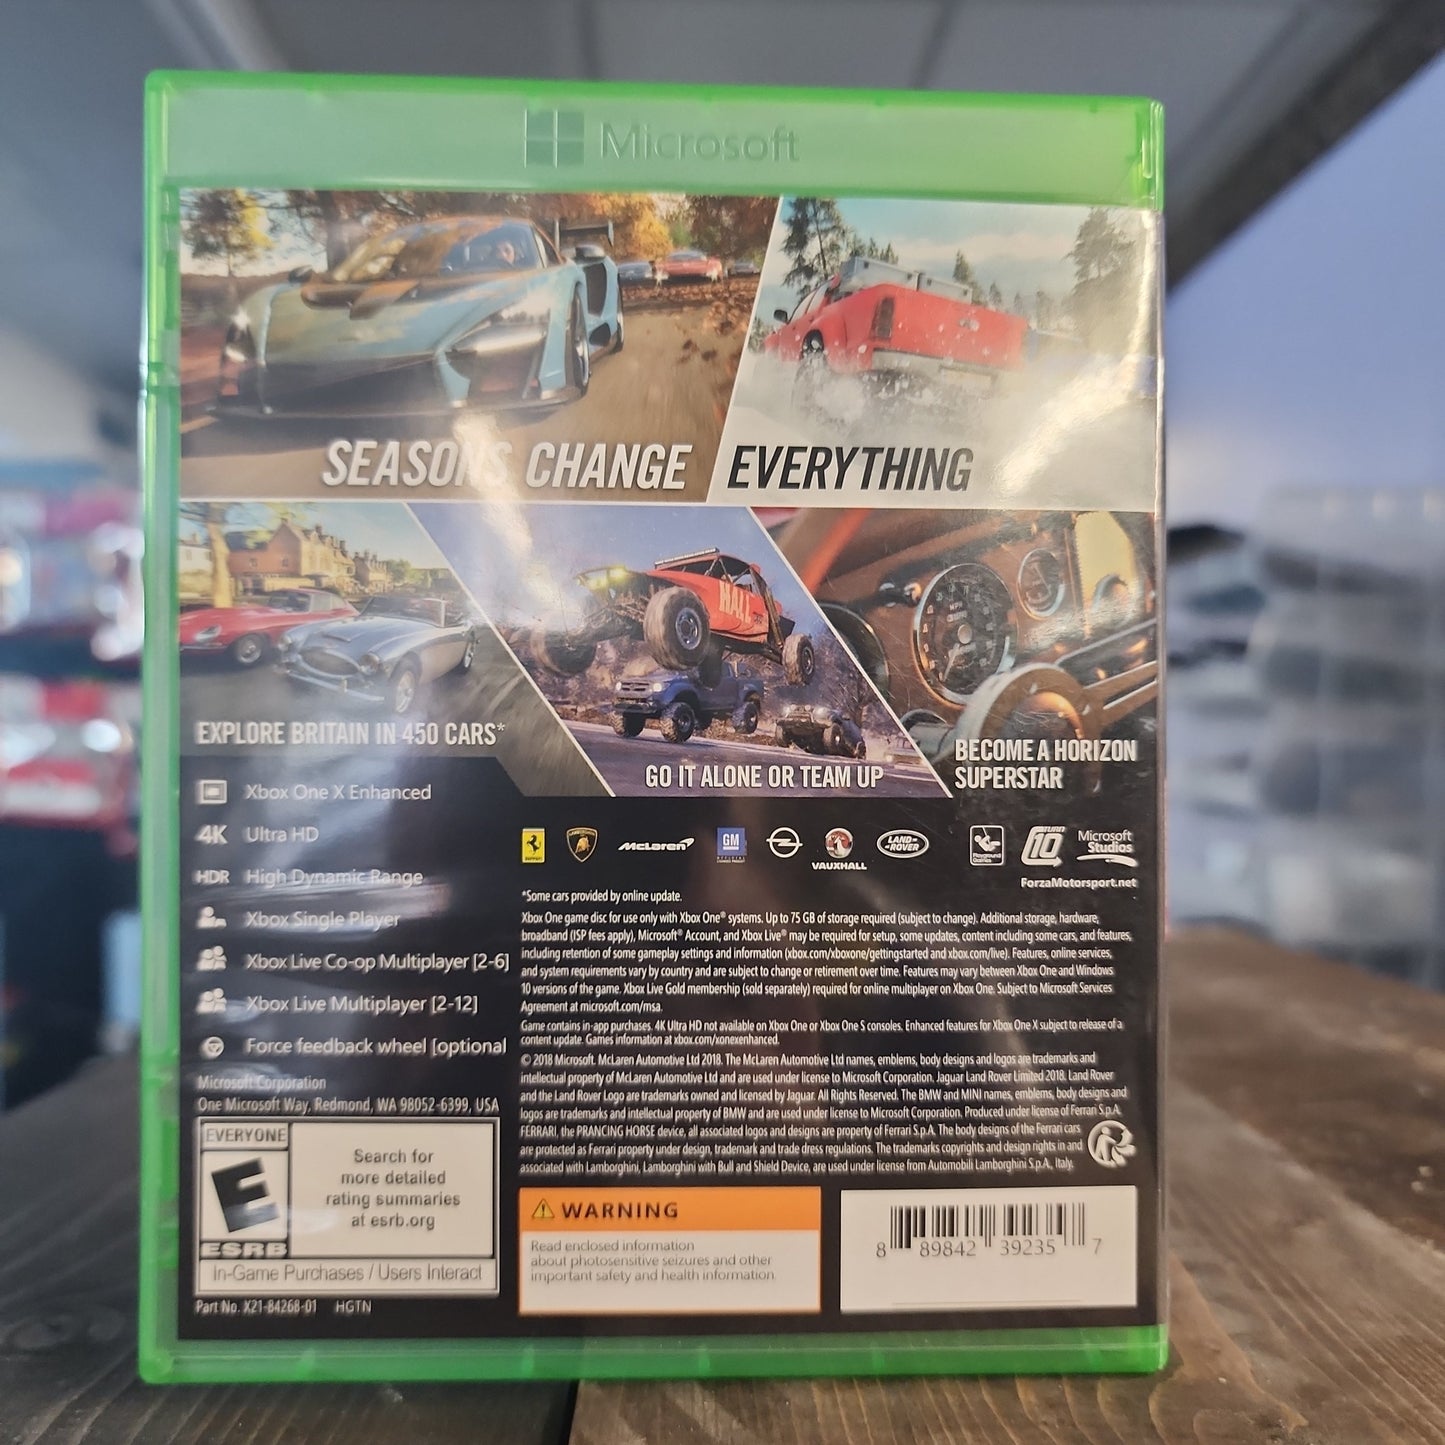 Xbox One - Forza Horizon 4 Retrograde Collectibles CIB, Forza, Forza Series, Microsoft Studios, Open World, Racing, Turn 10, Xbox One Preowned Video Game 